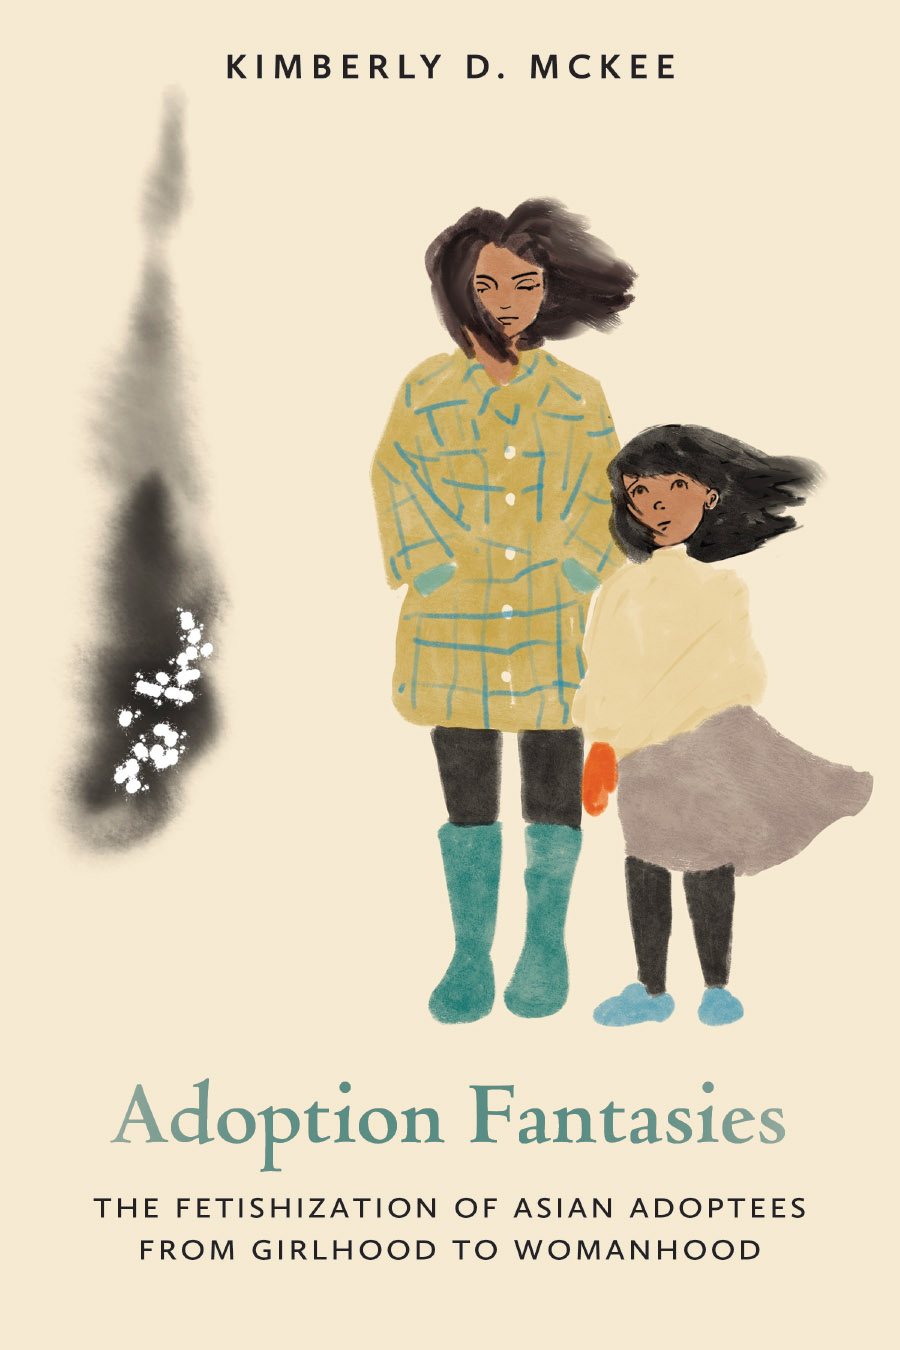 Haphazard Families: Adoption and Romanticism book cover